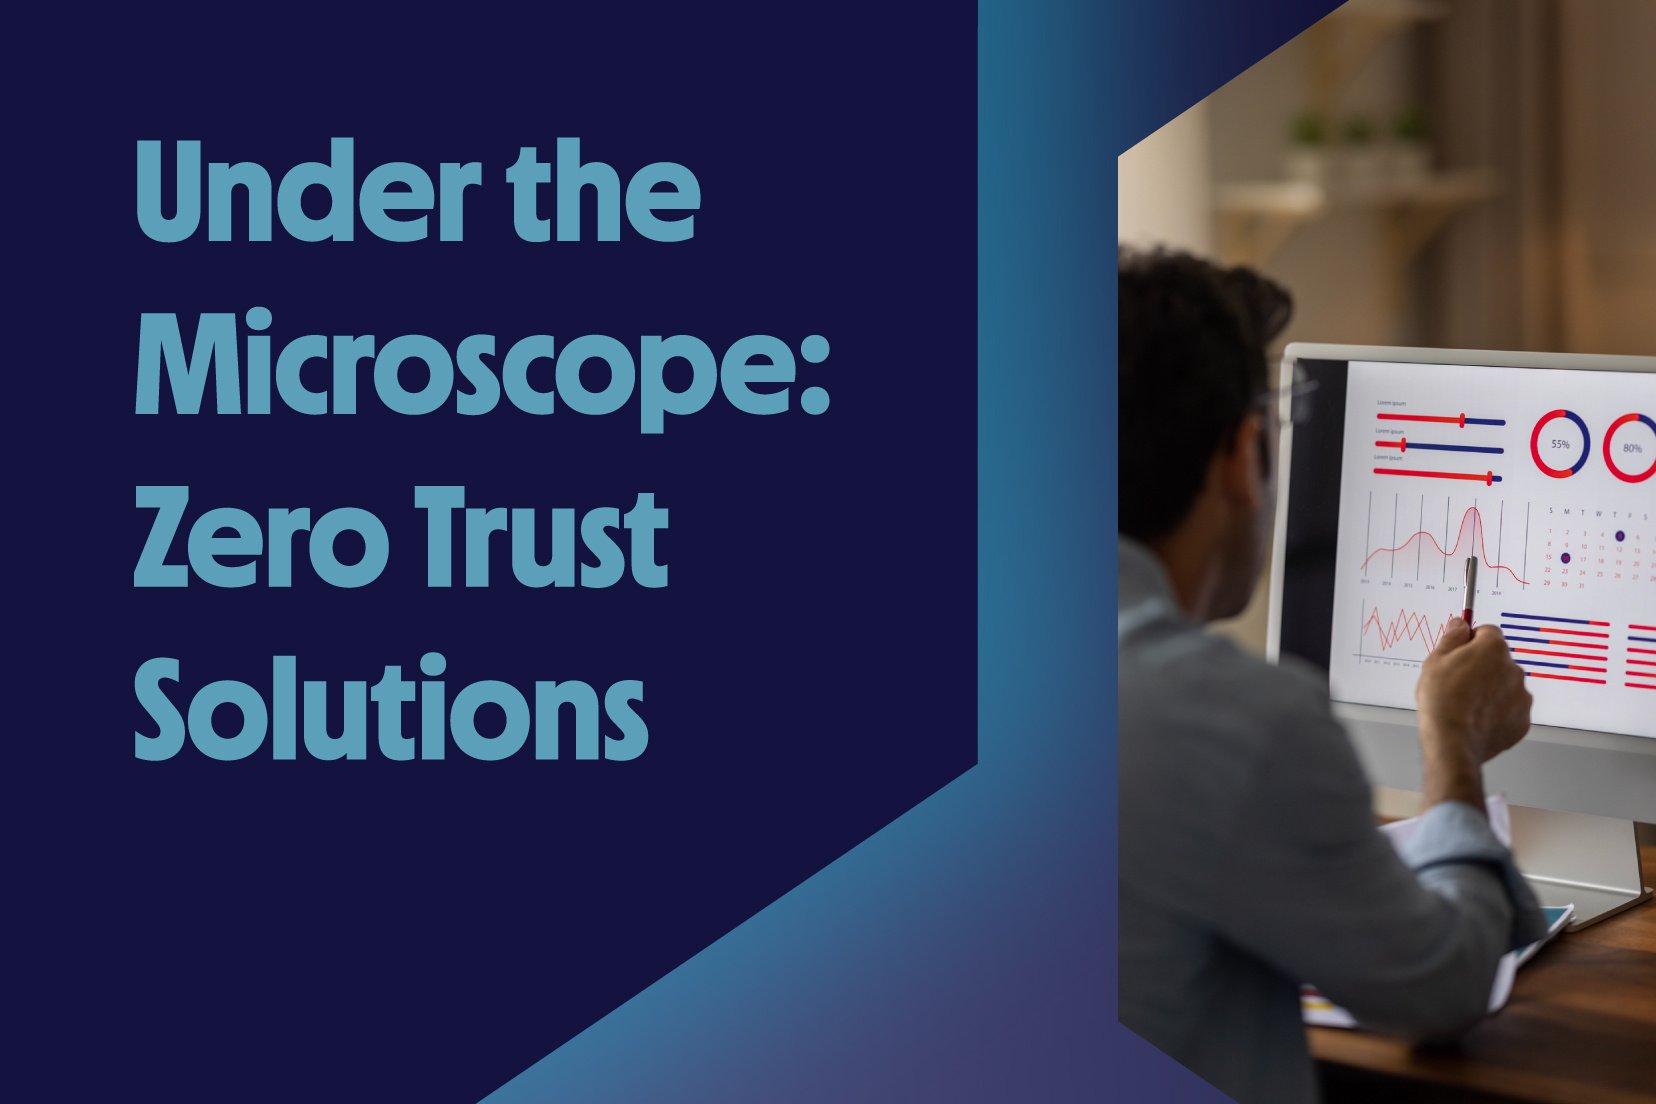 Under the Microscope: Zero Trust Solutions